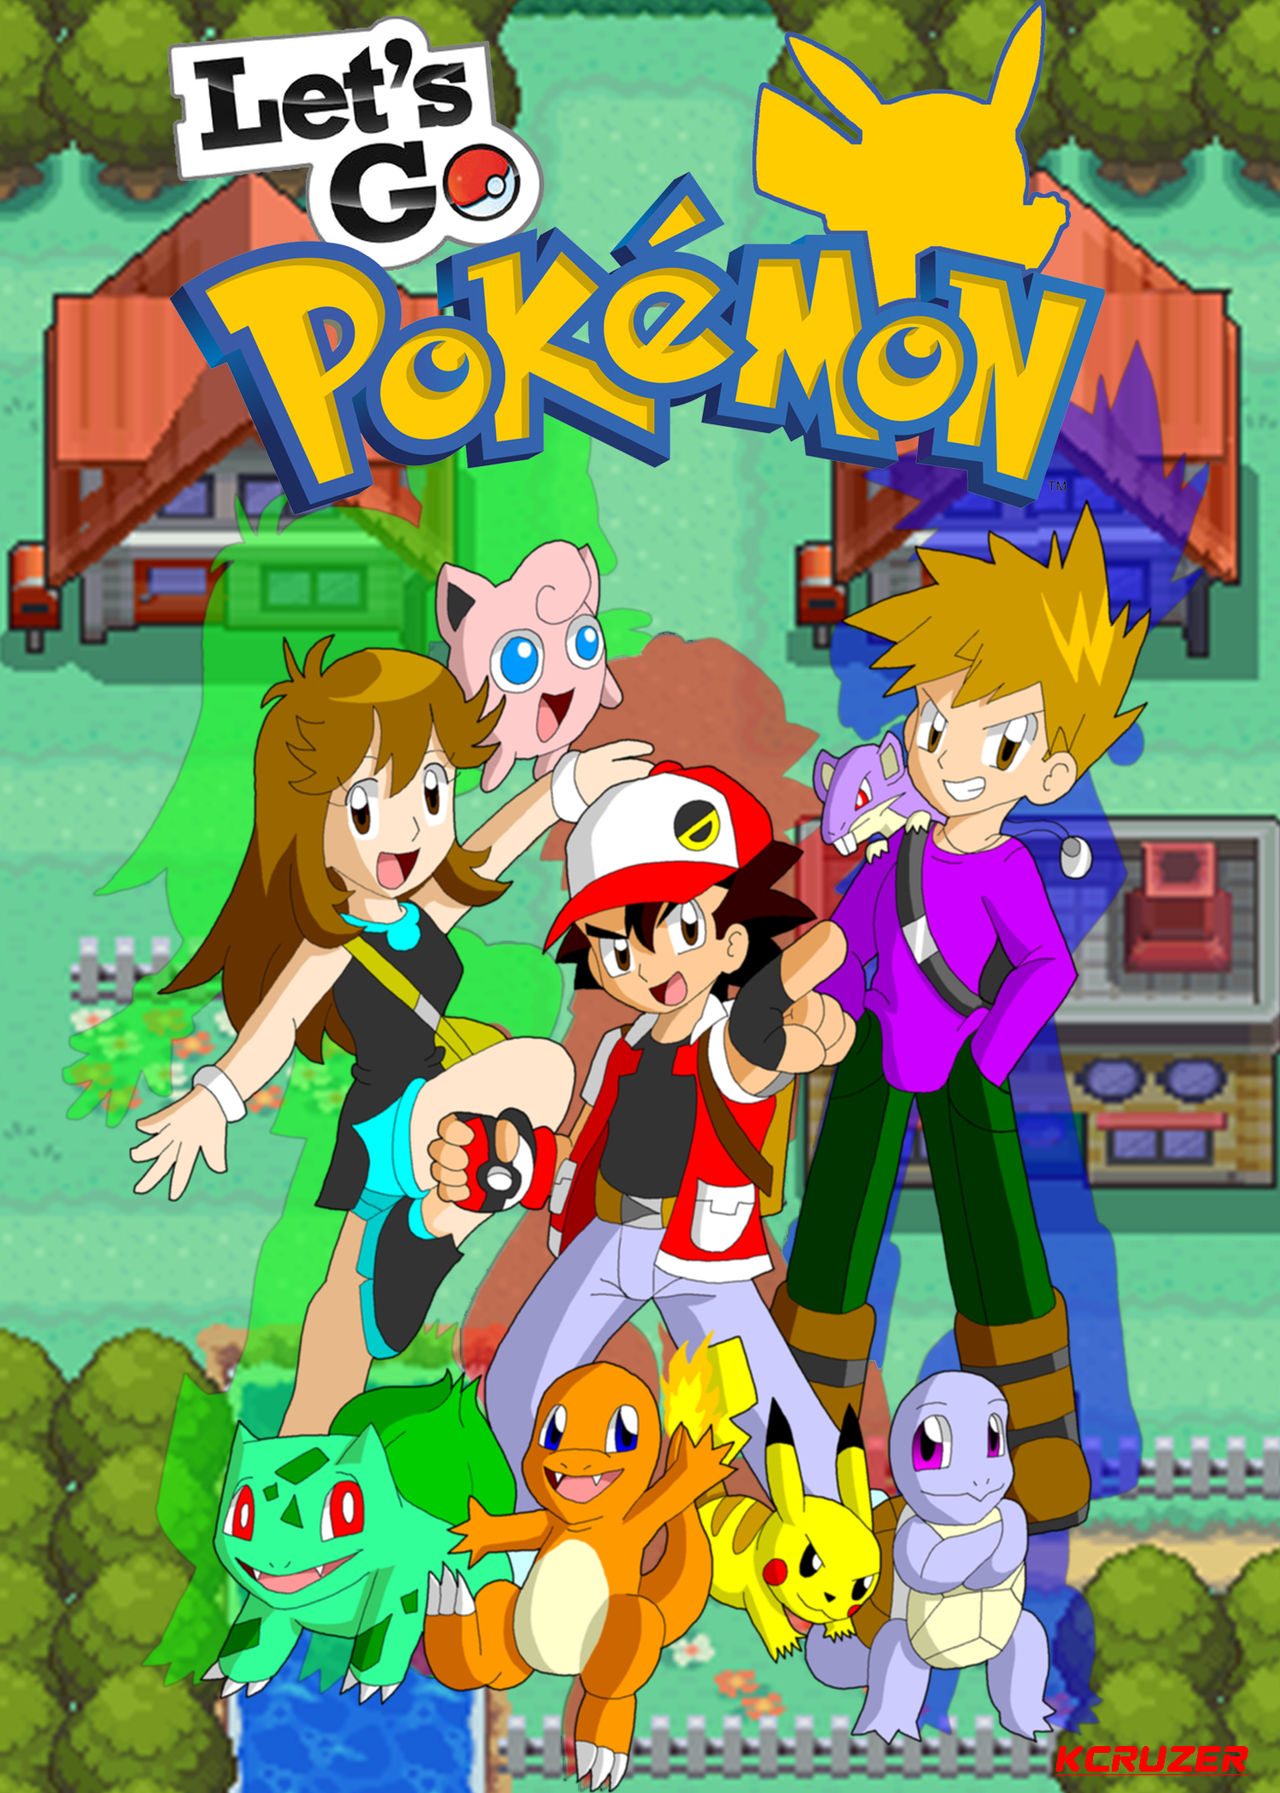 Pokemon Reboot Poster (International Version) on KCruzer by DeviantArt